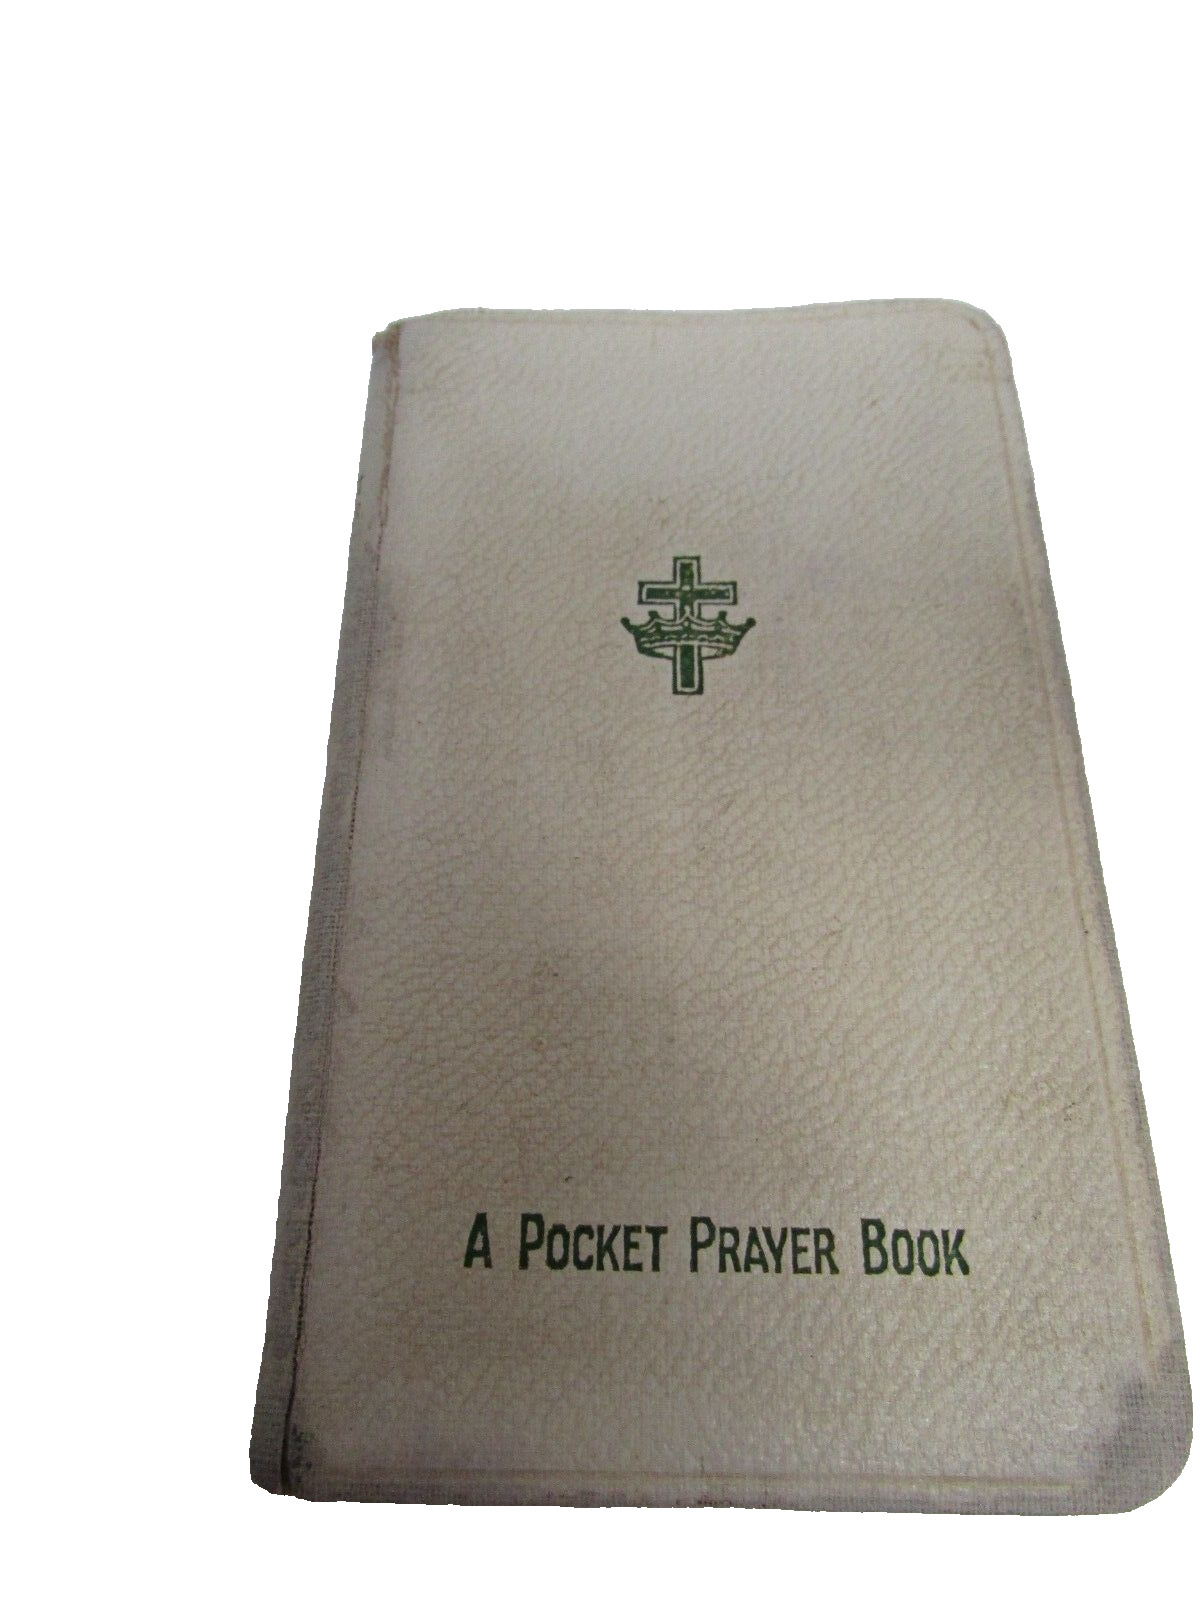 A Pocket Prayer Book 1941